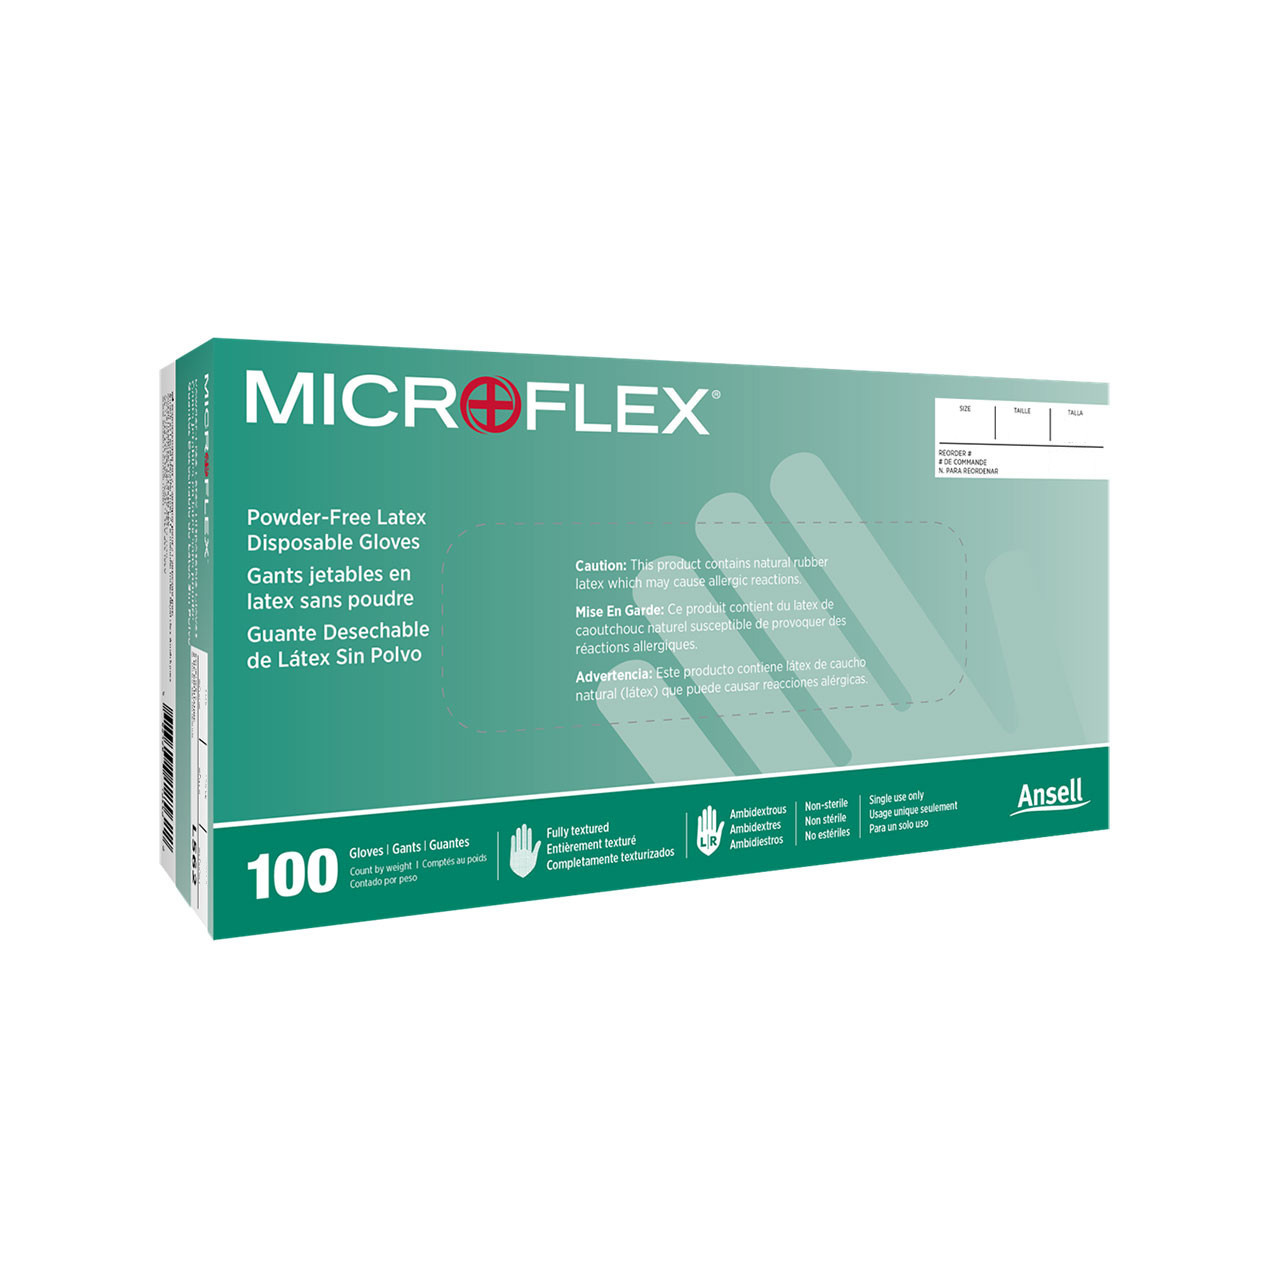 MicroFlex